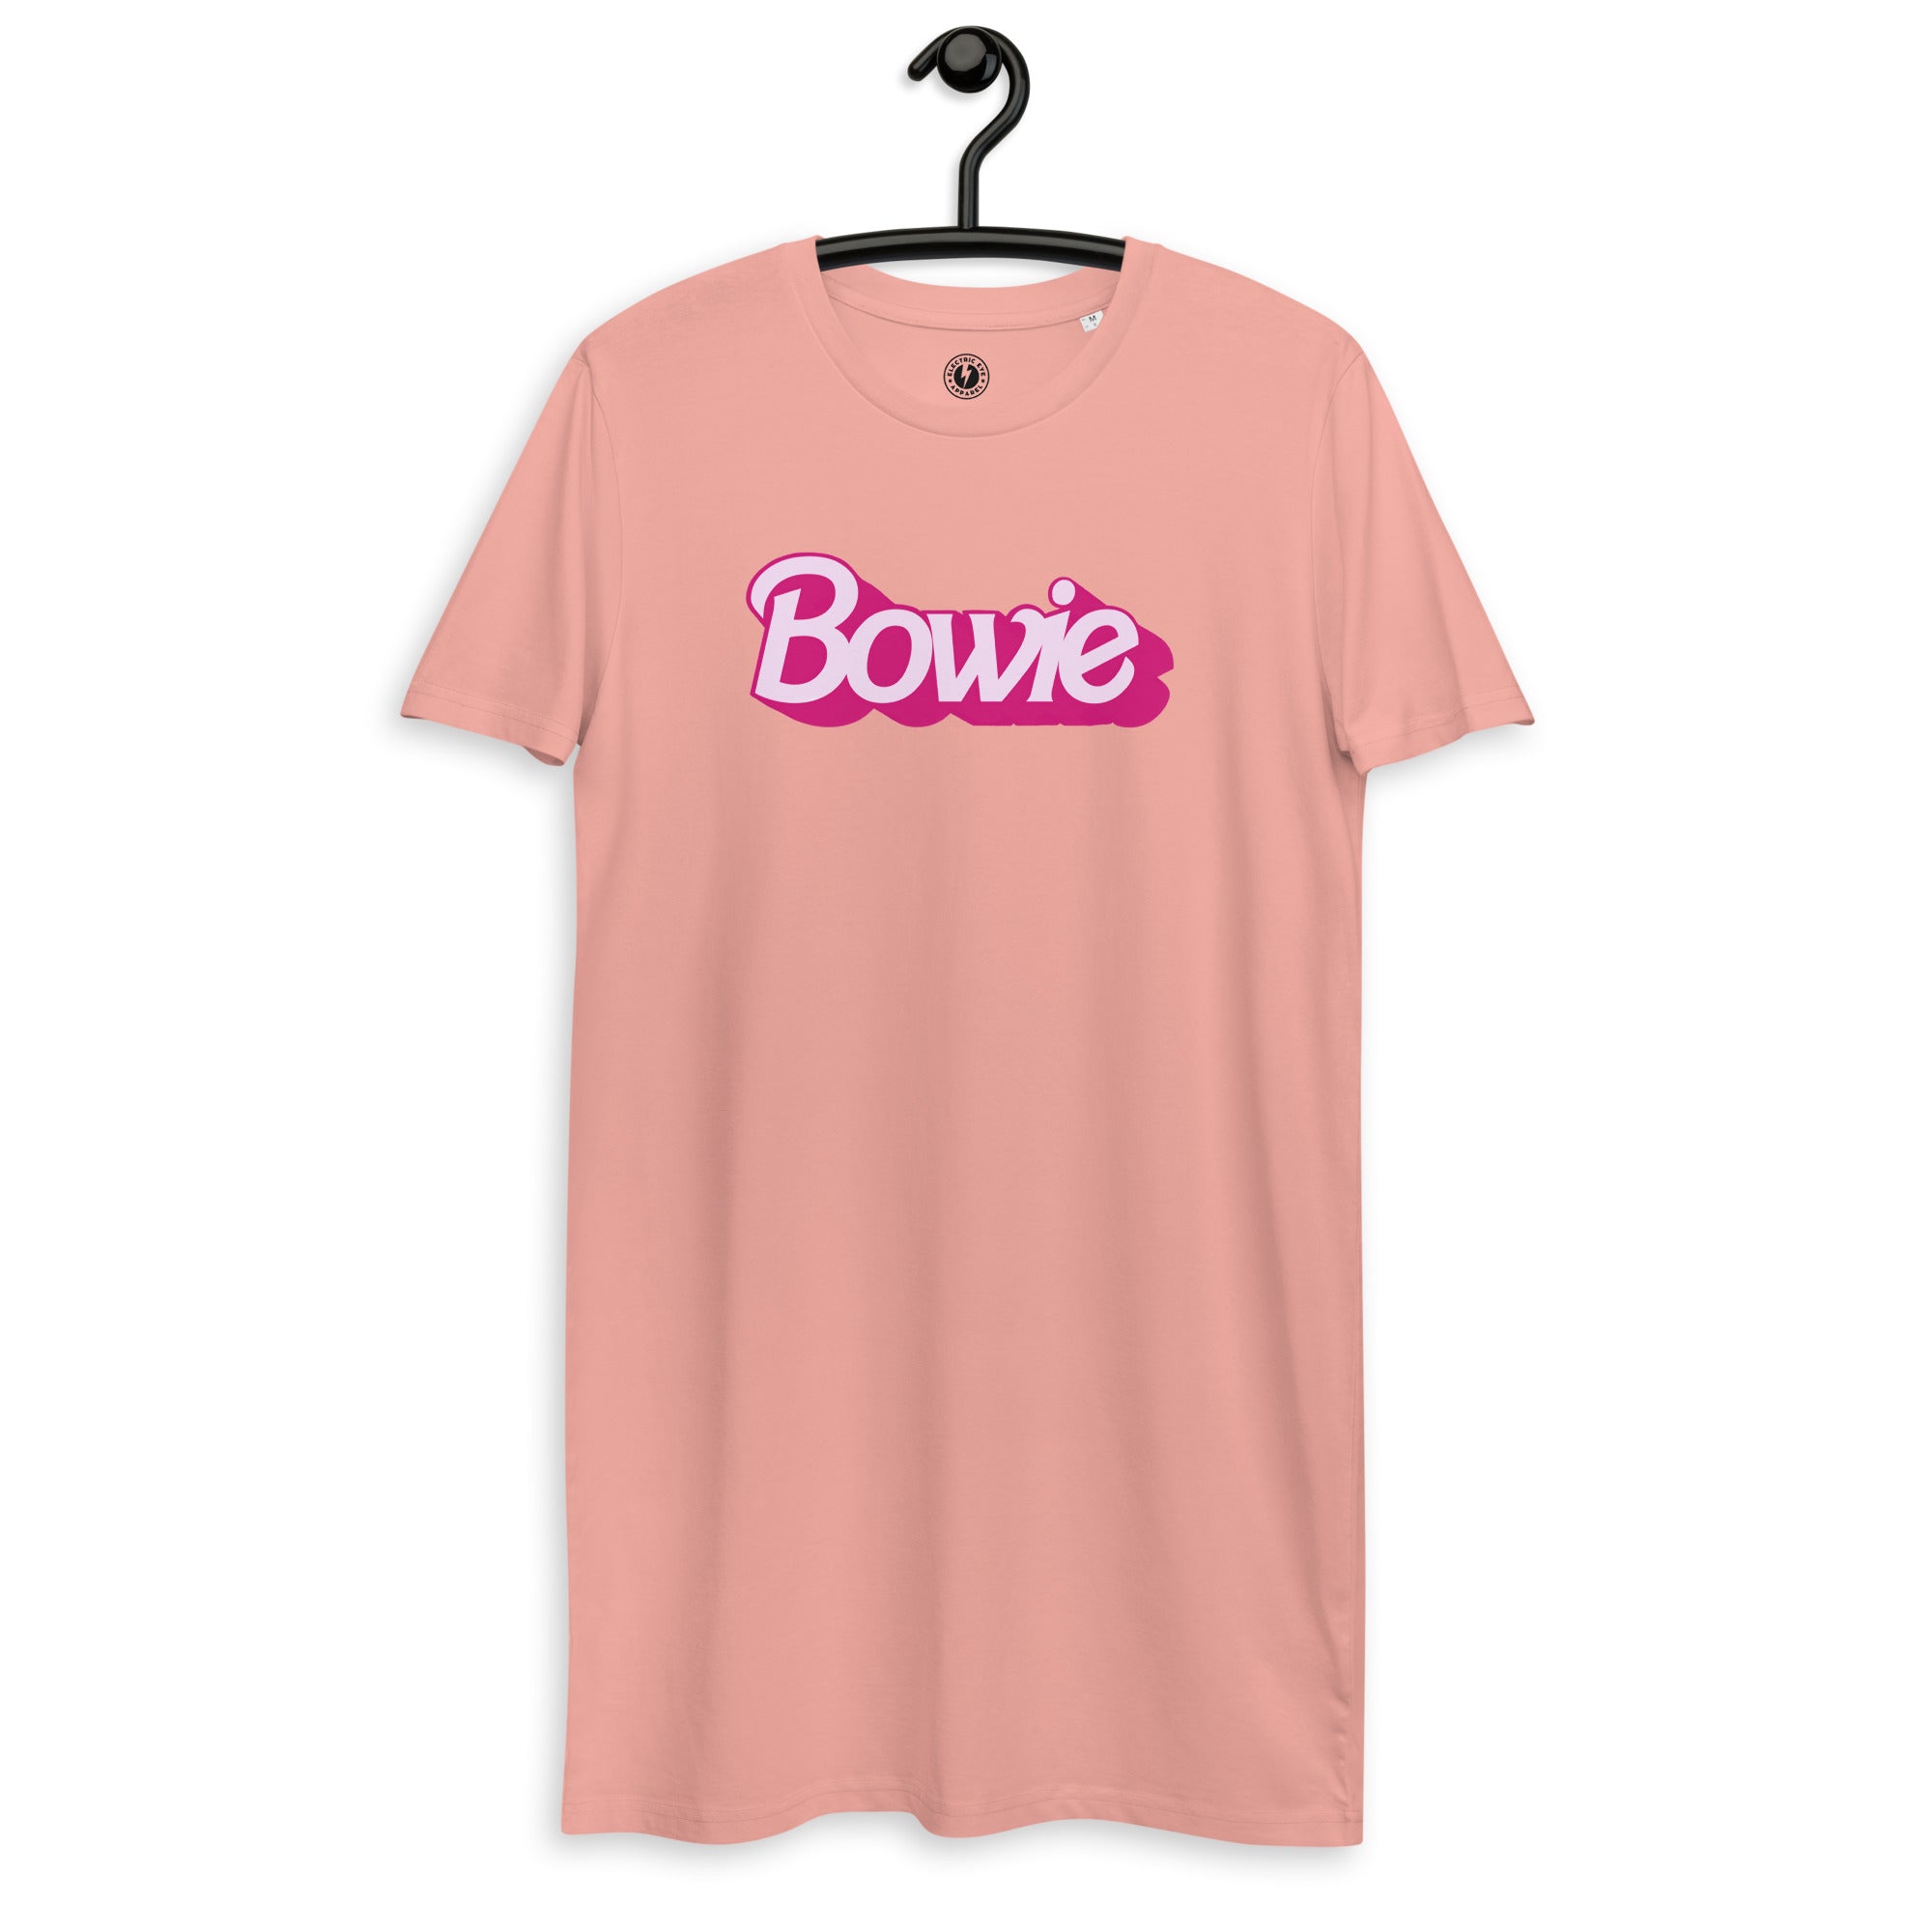 Bowie (famous doll font) Printed Organic cotton t-shirt dress